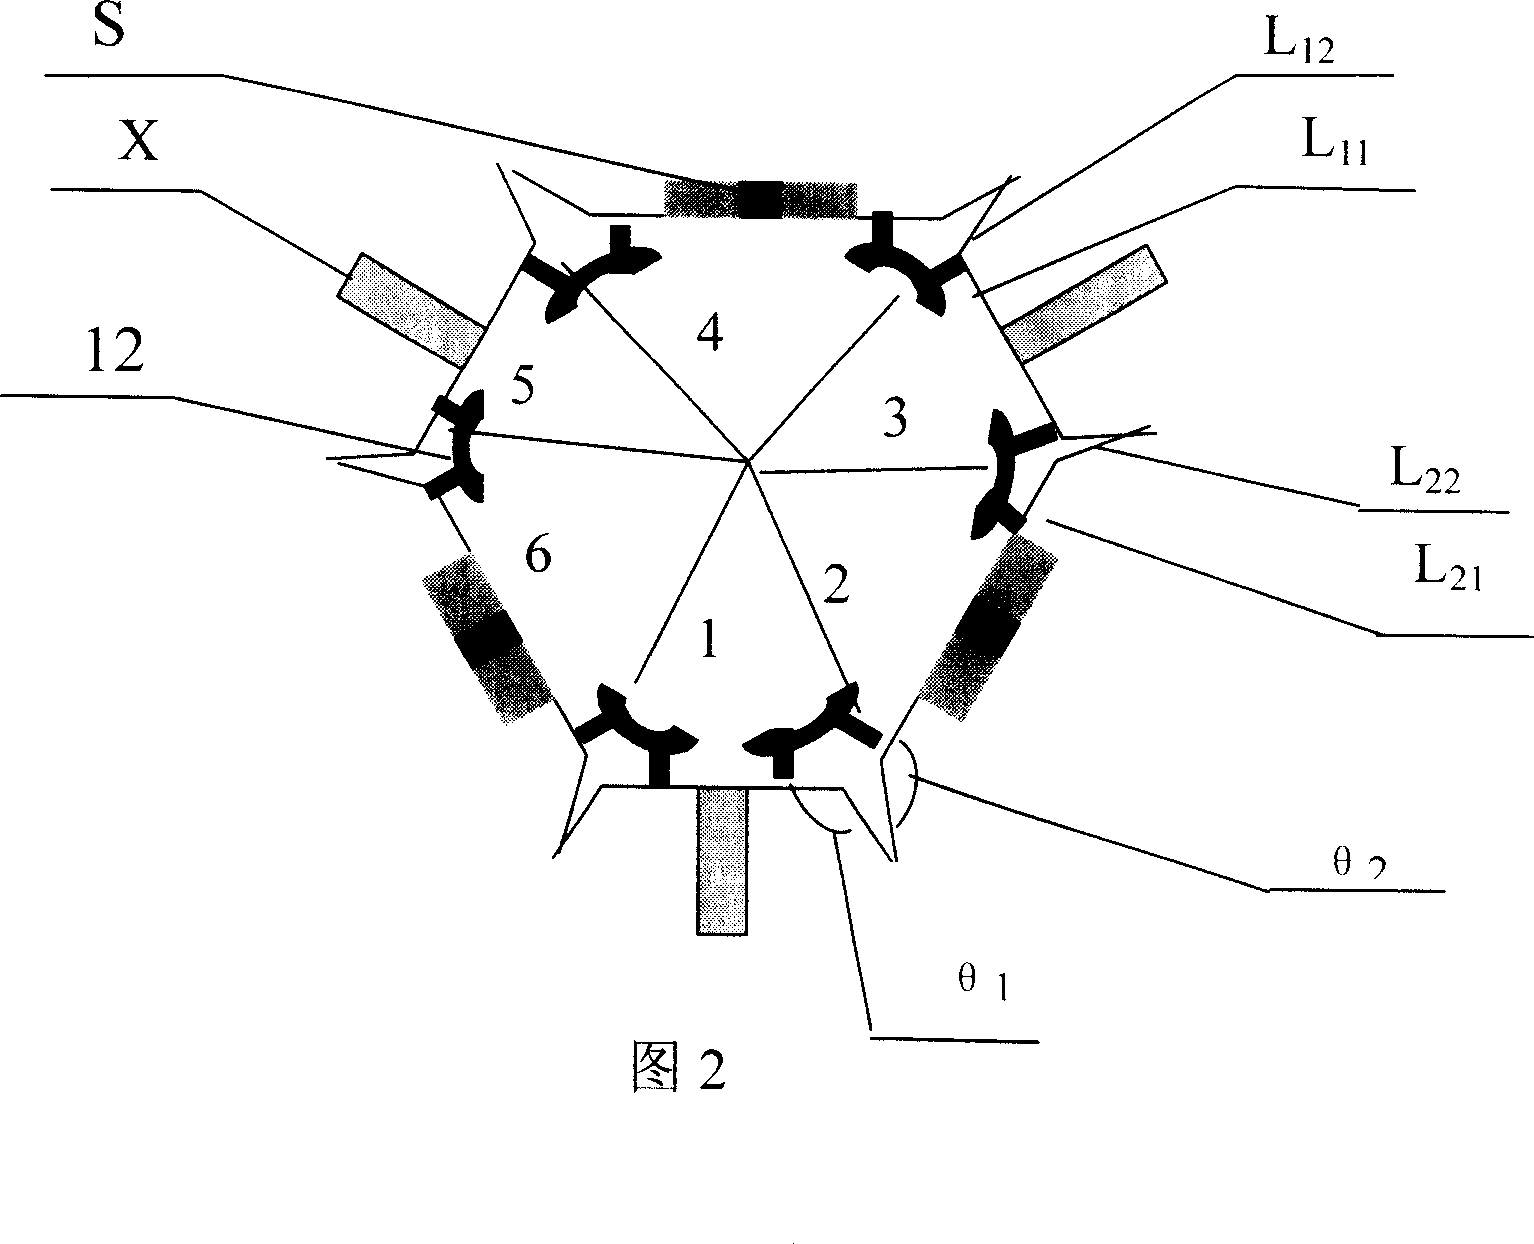 Four-polarization six-sector array omnidirectional antenna